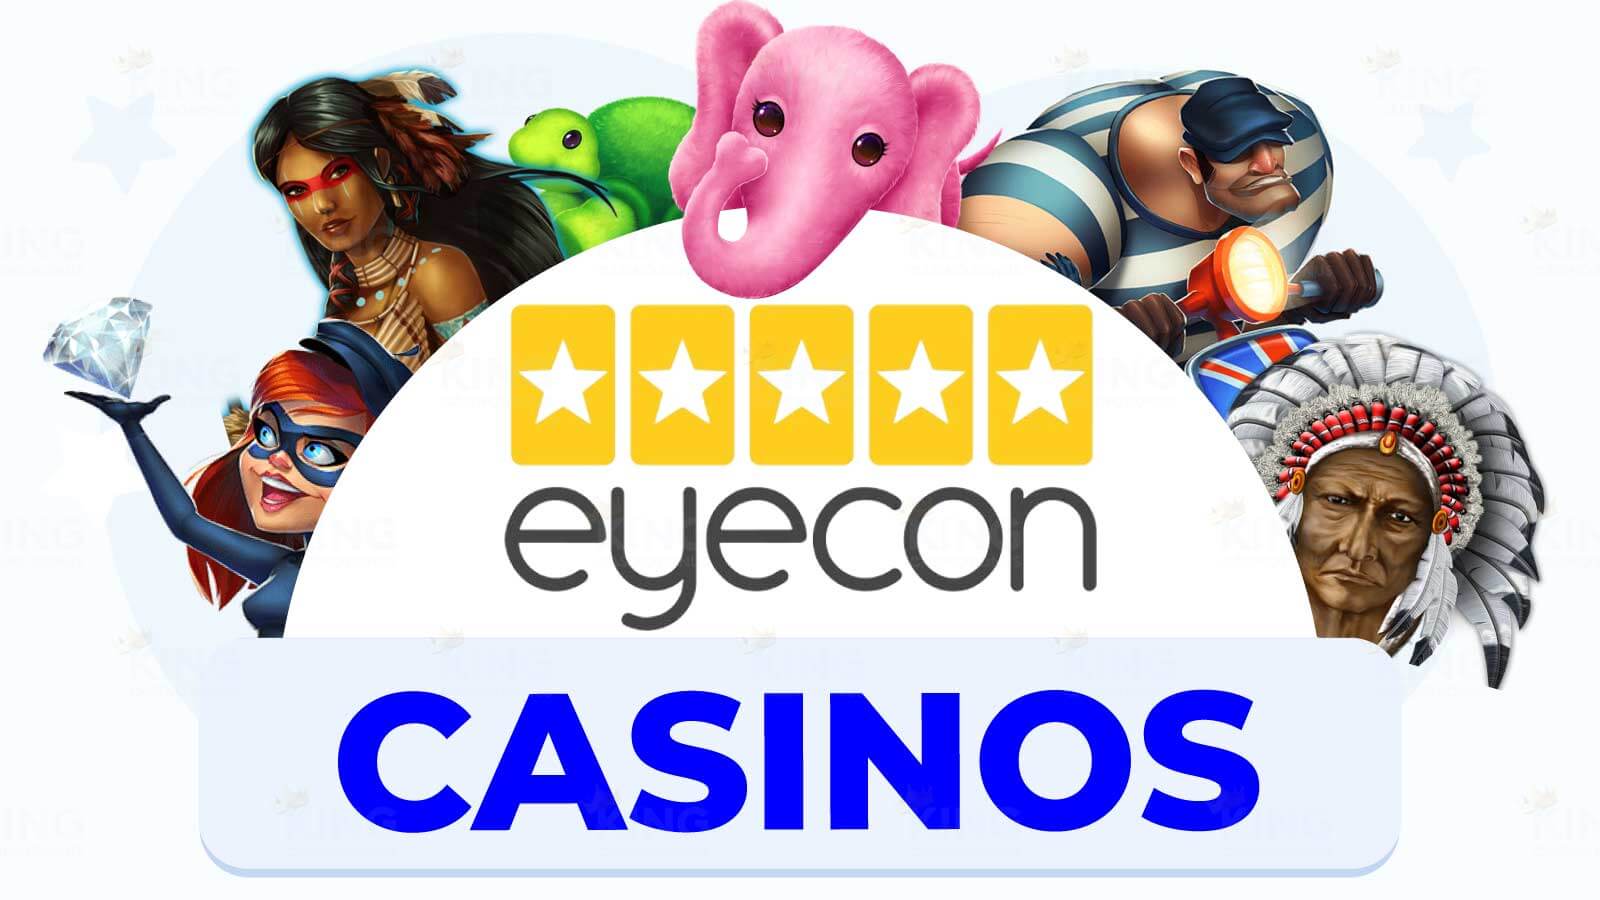 Eyecon Casinos